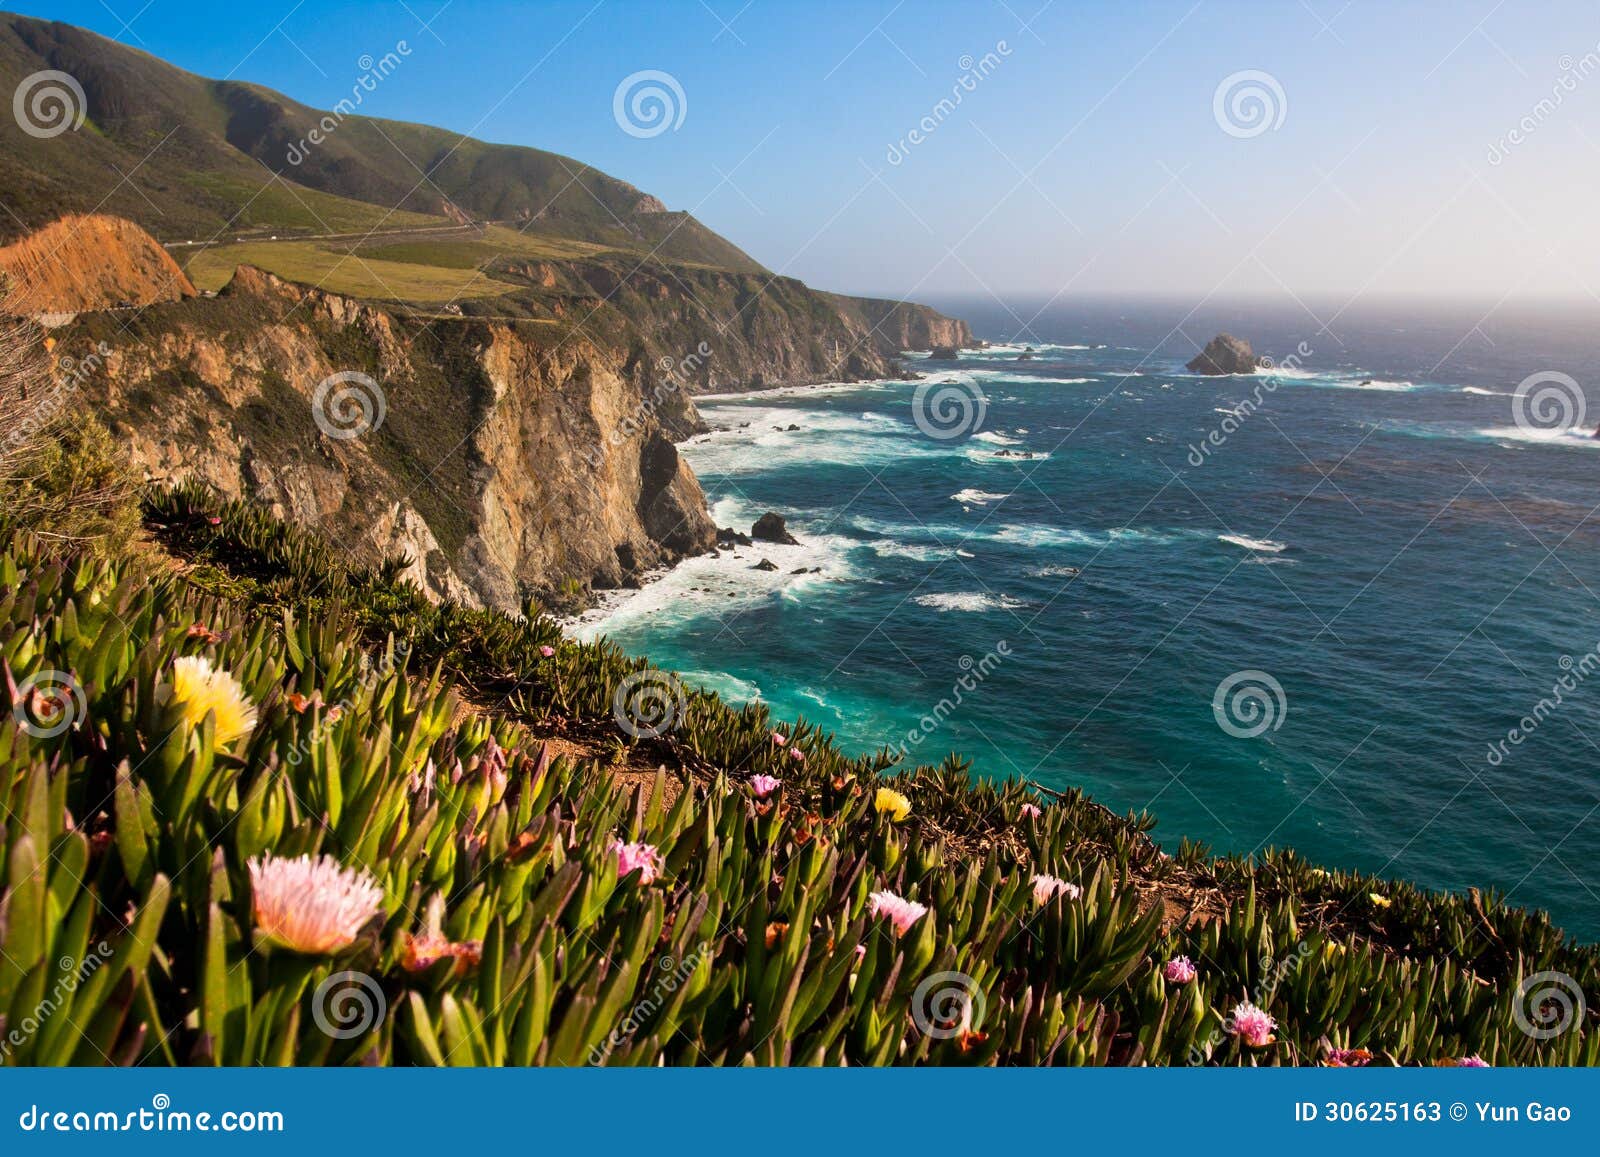 beautiful coastline along the pacific in big sur,california